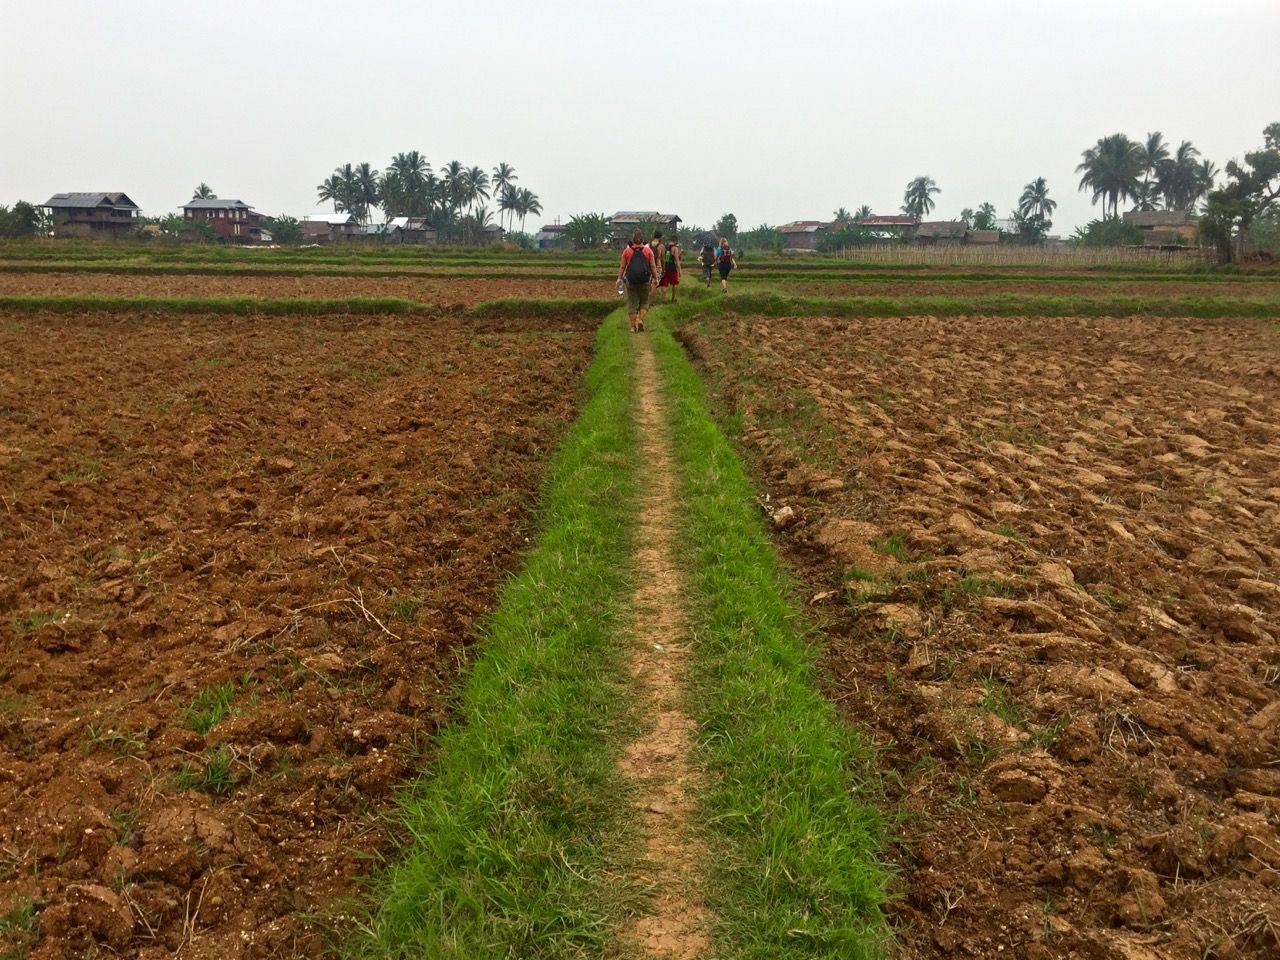 People walking along a rice field path.